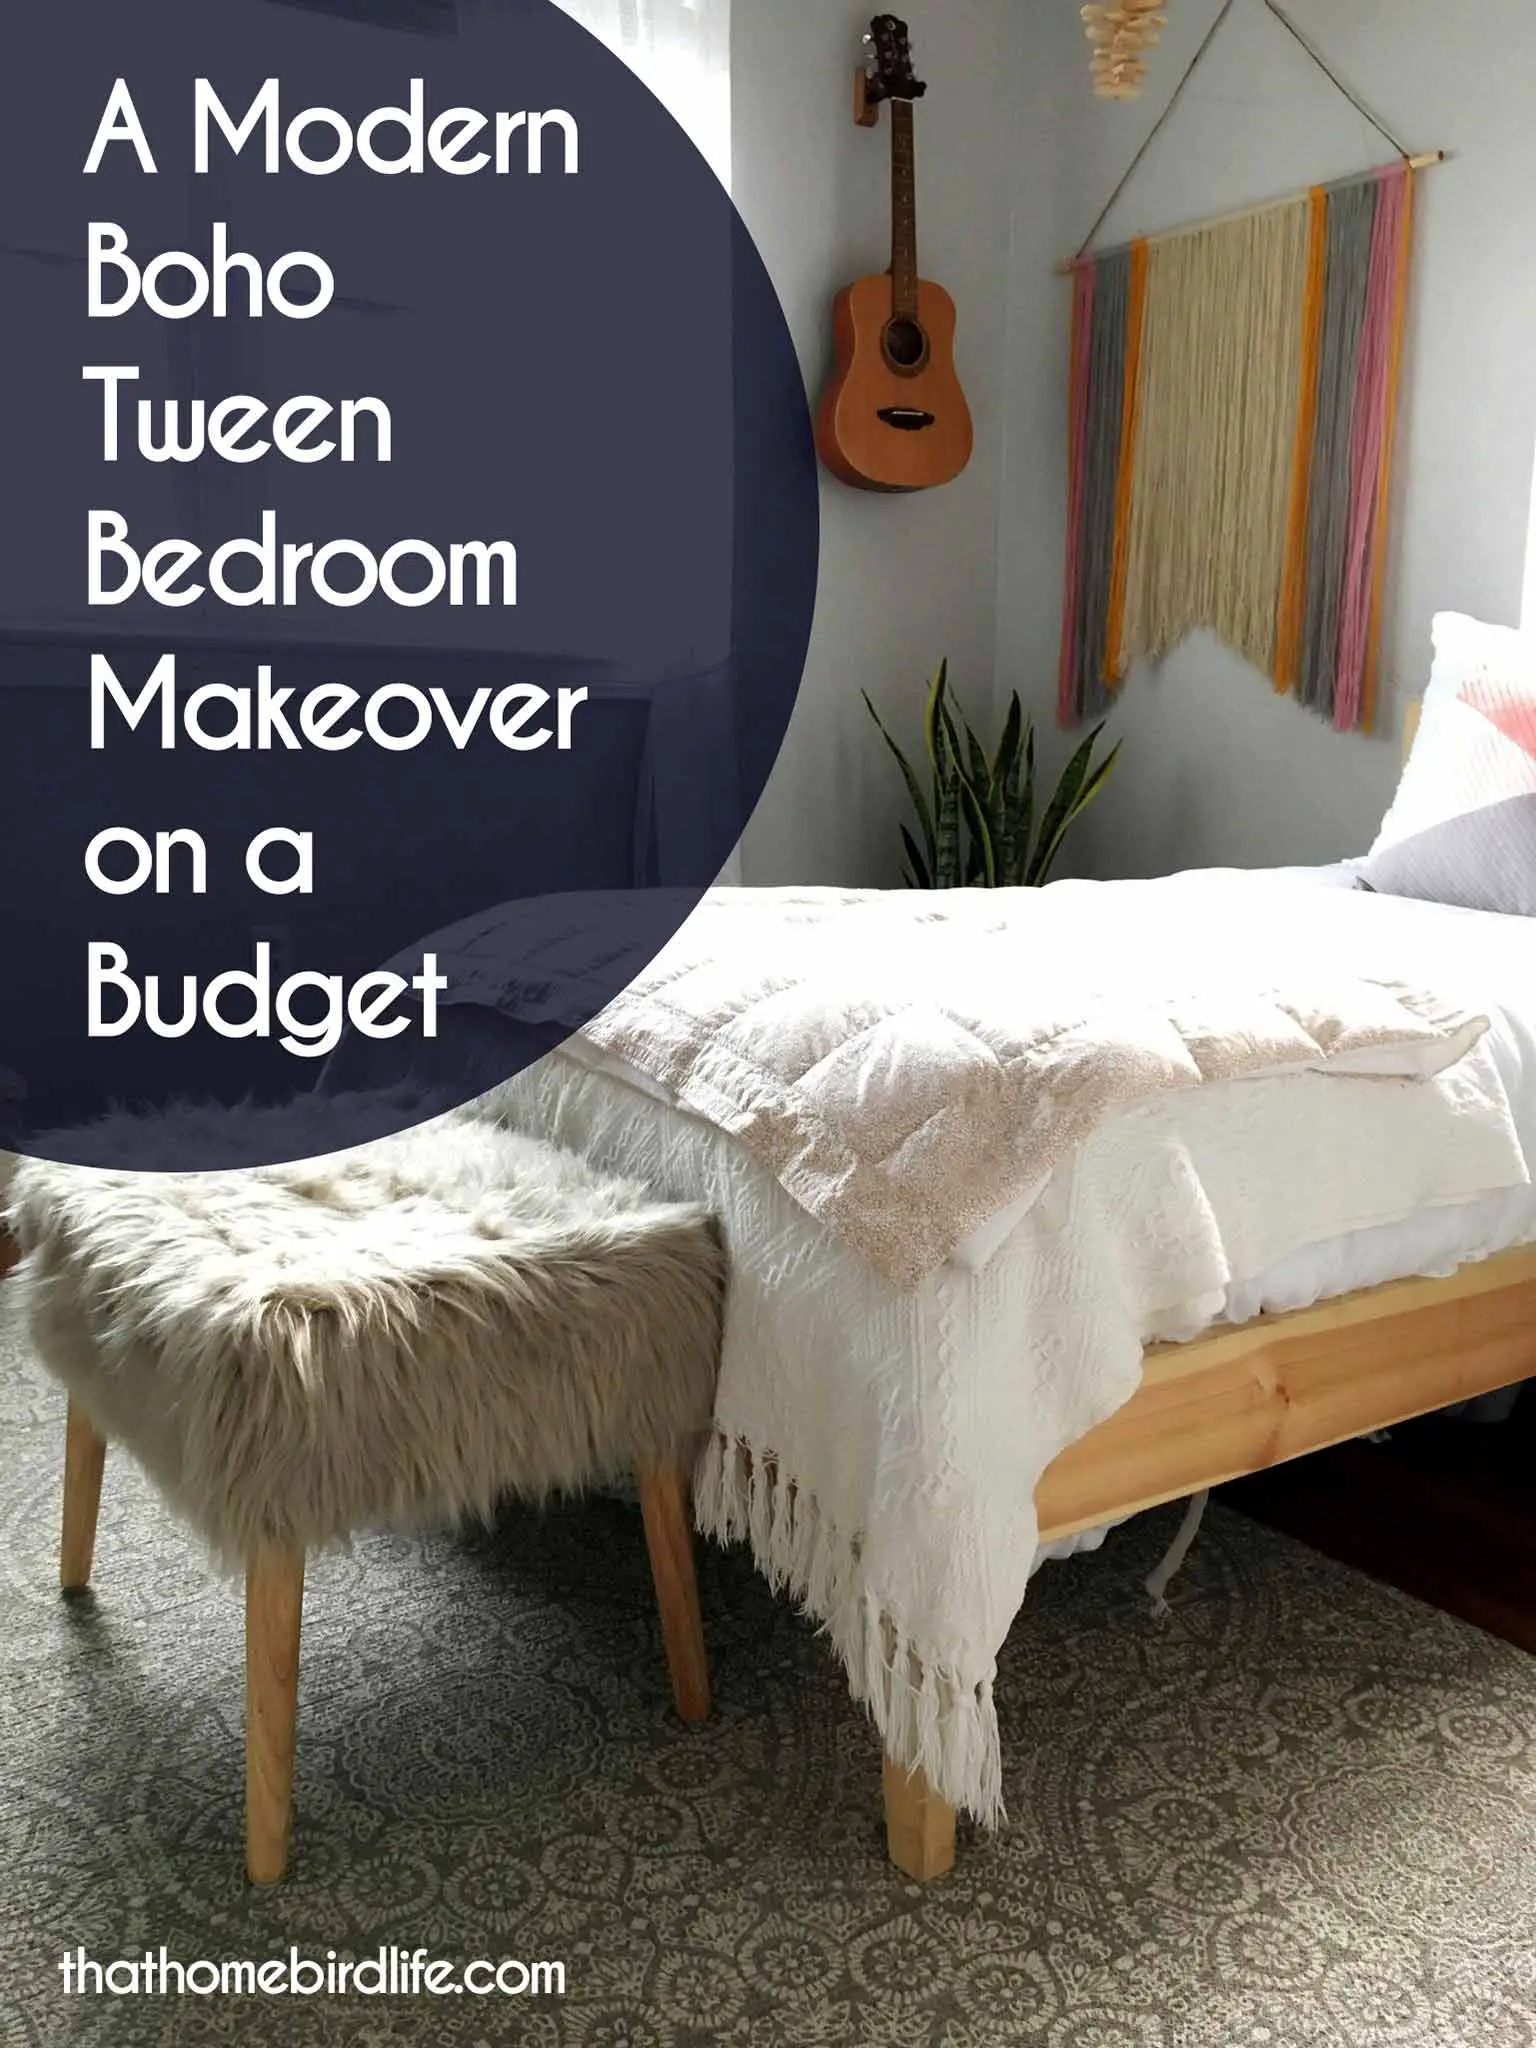 A modern boho tween bedroom makeover on a budget - That Homebird Life Blog